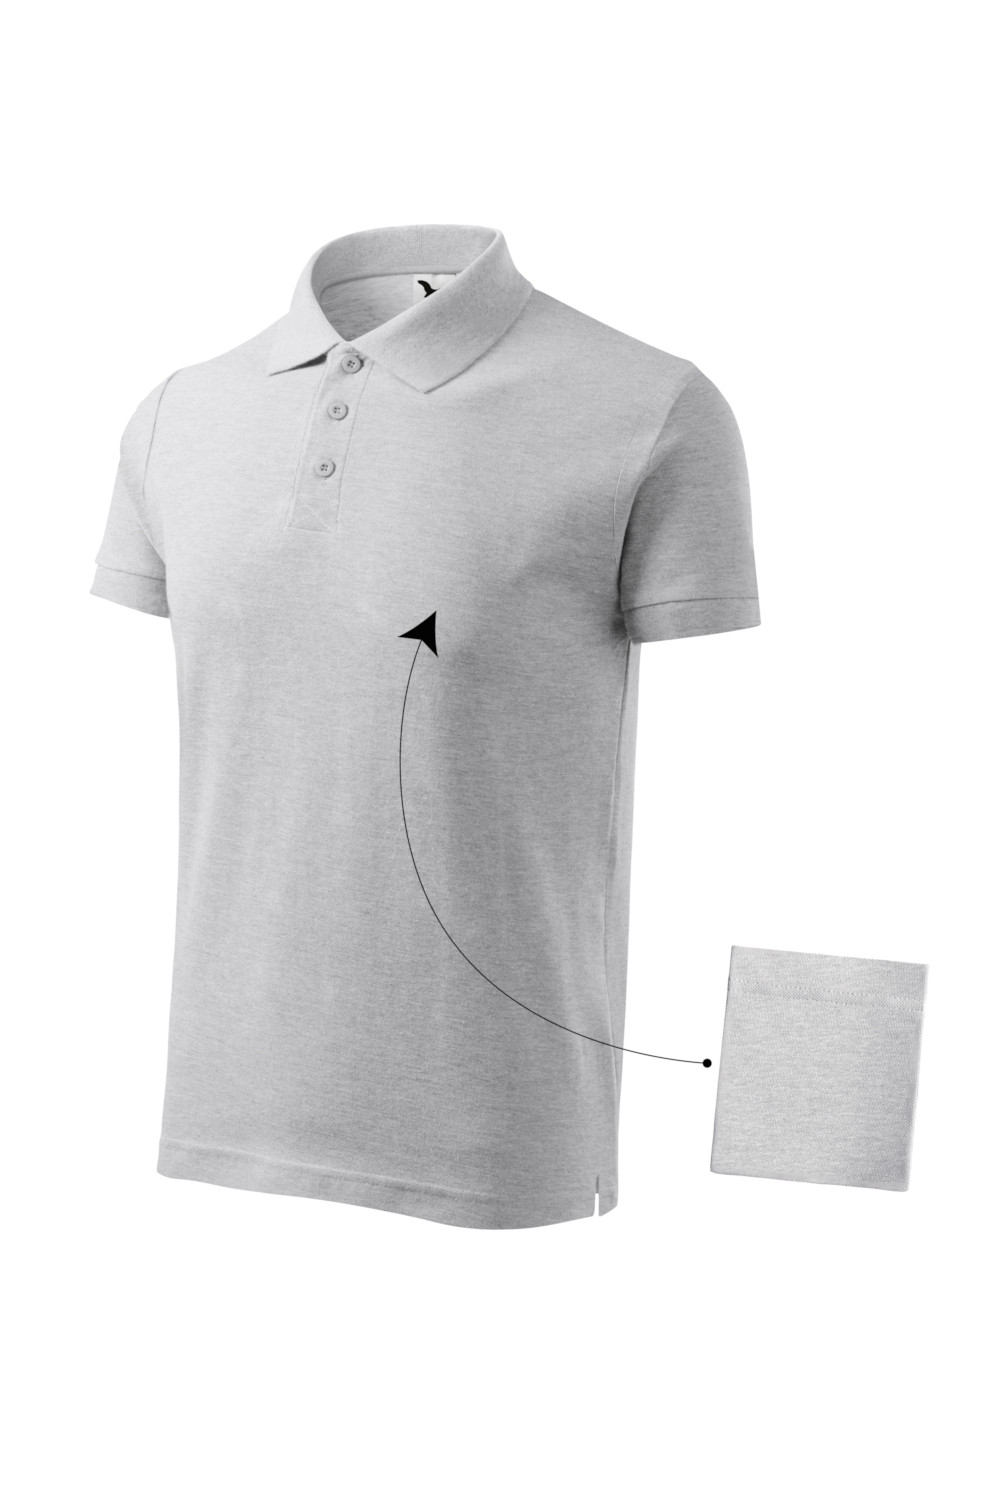 Koszulka Polo męska 100% bawełna 212 polo jasno szary melanż